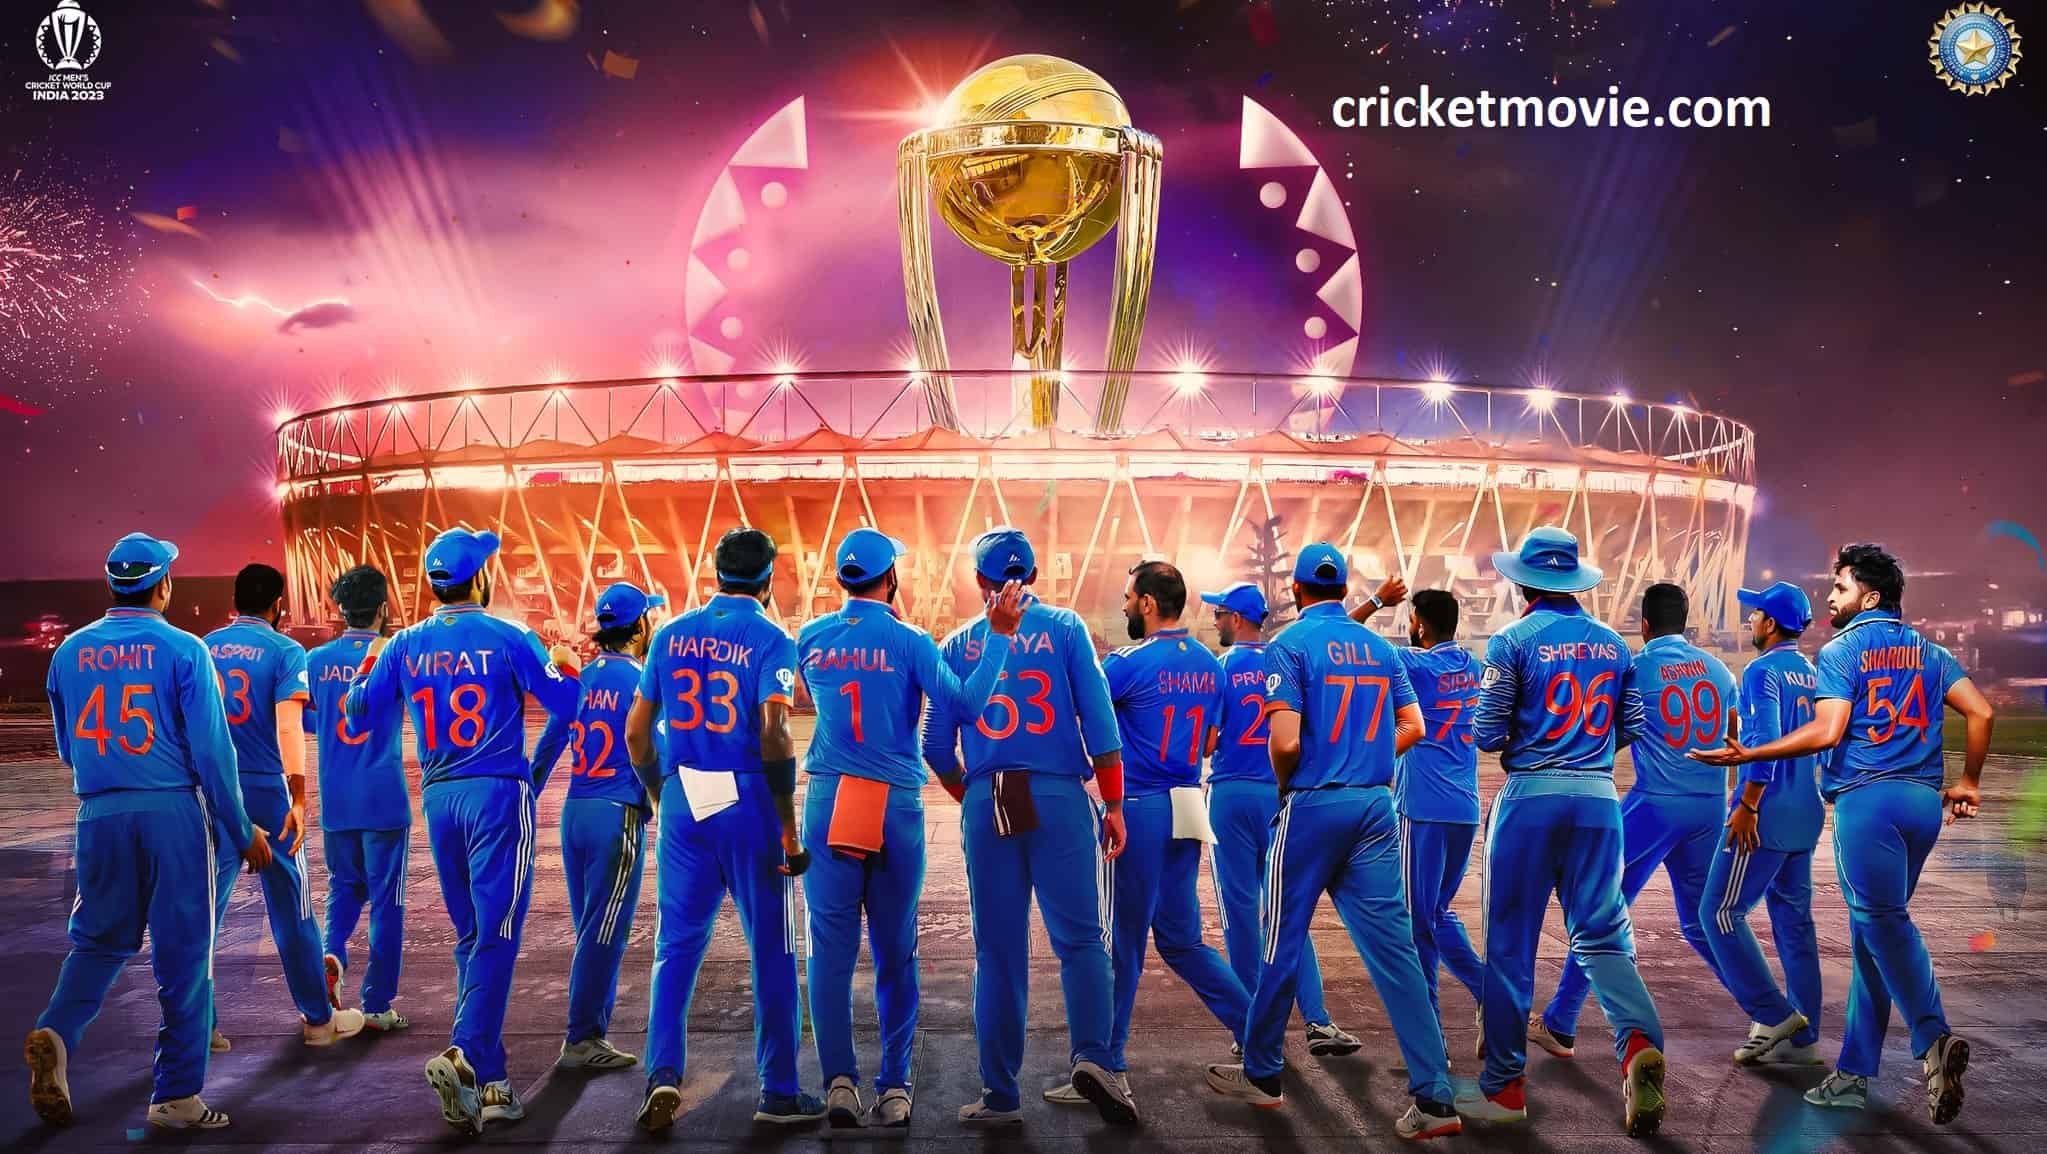 Team India qualifies for the CWC 23 final-cricketmovie.com